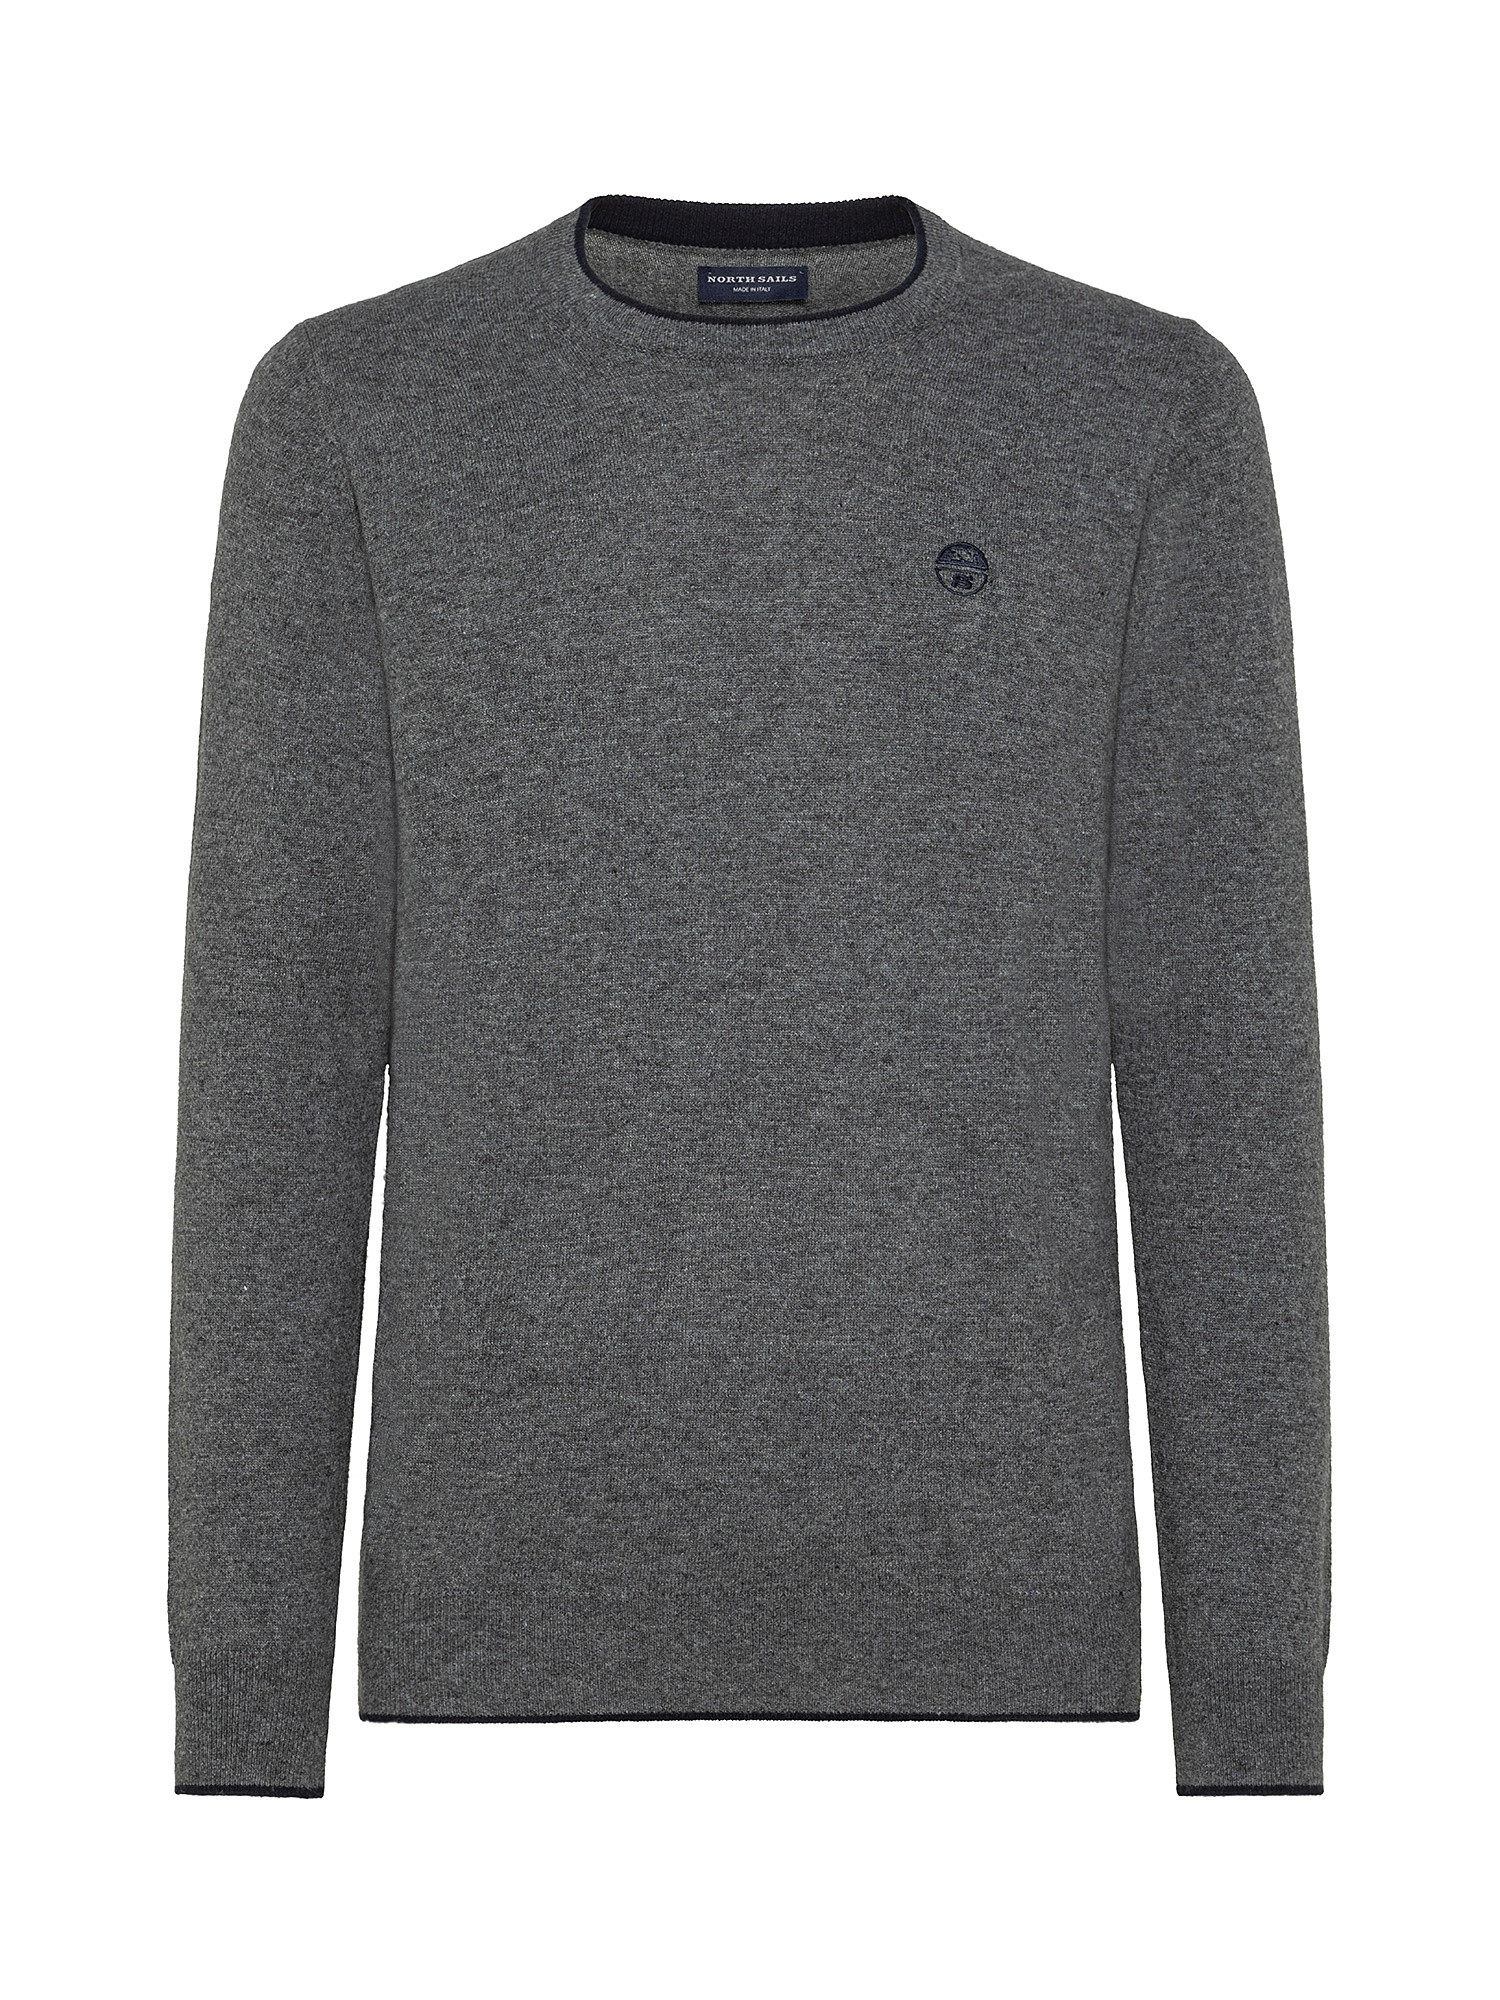 Crewneck sweater, Grey, large image number 0